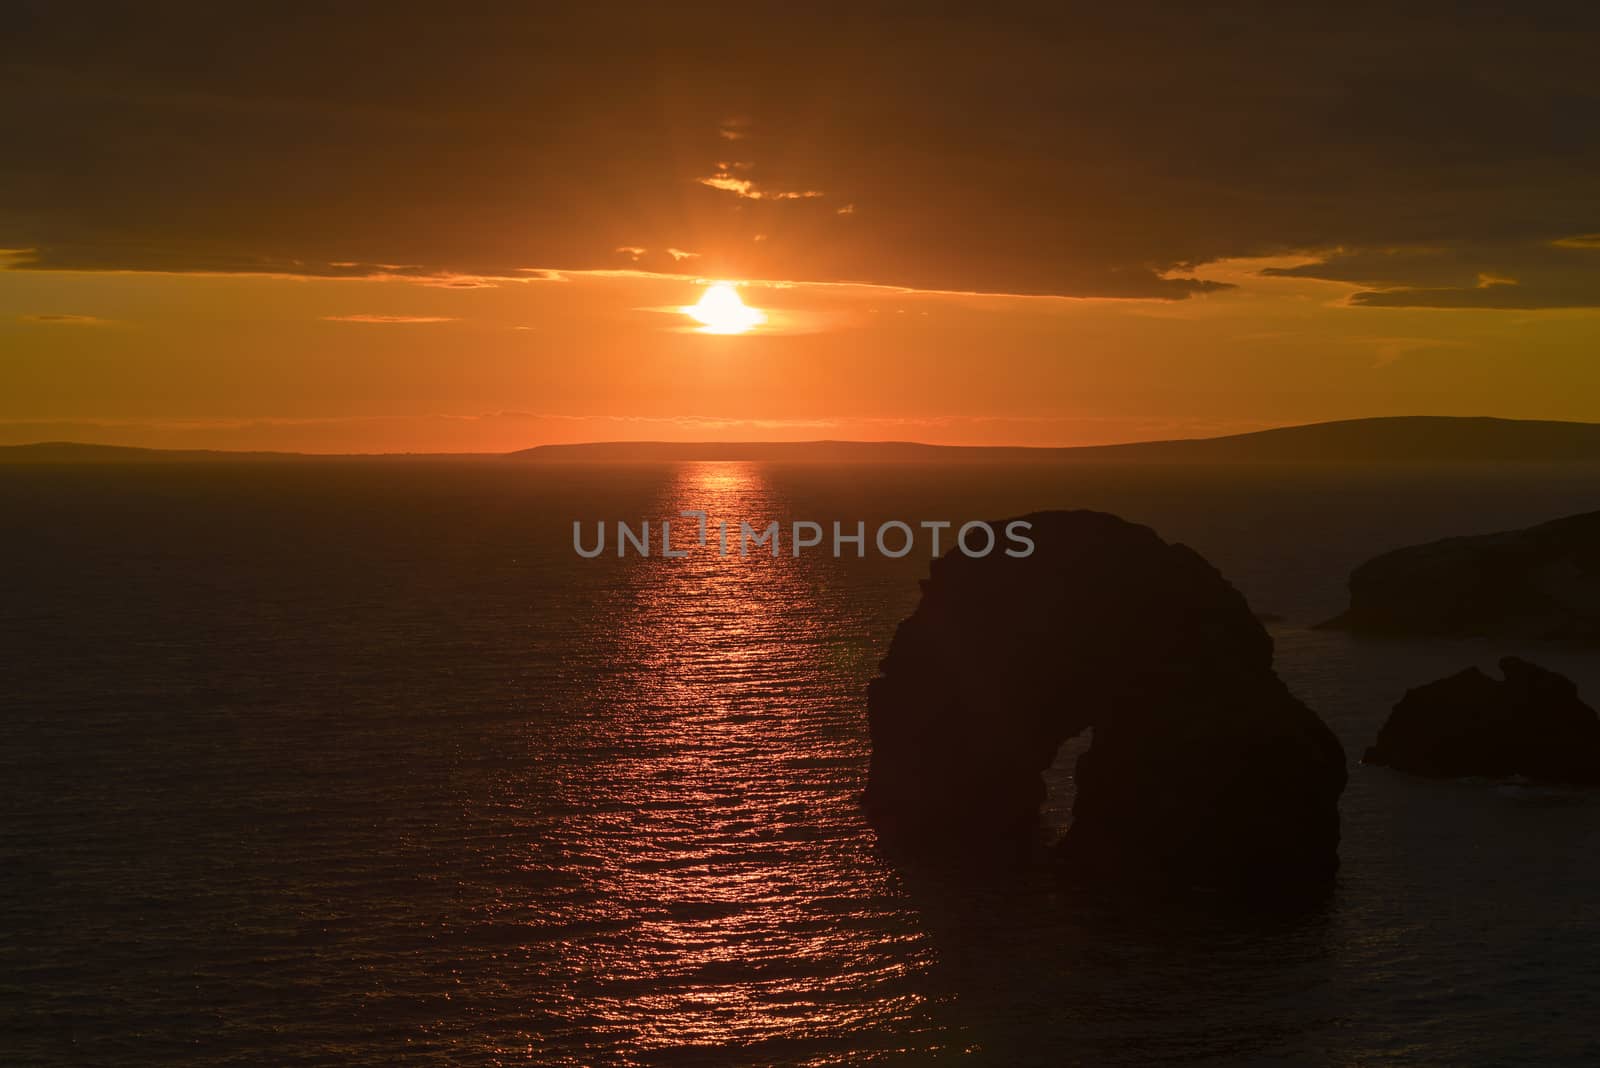 virgin rock sunset on the coastline by morrbyte